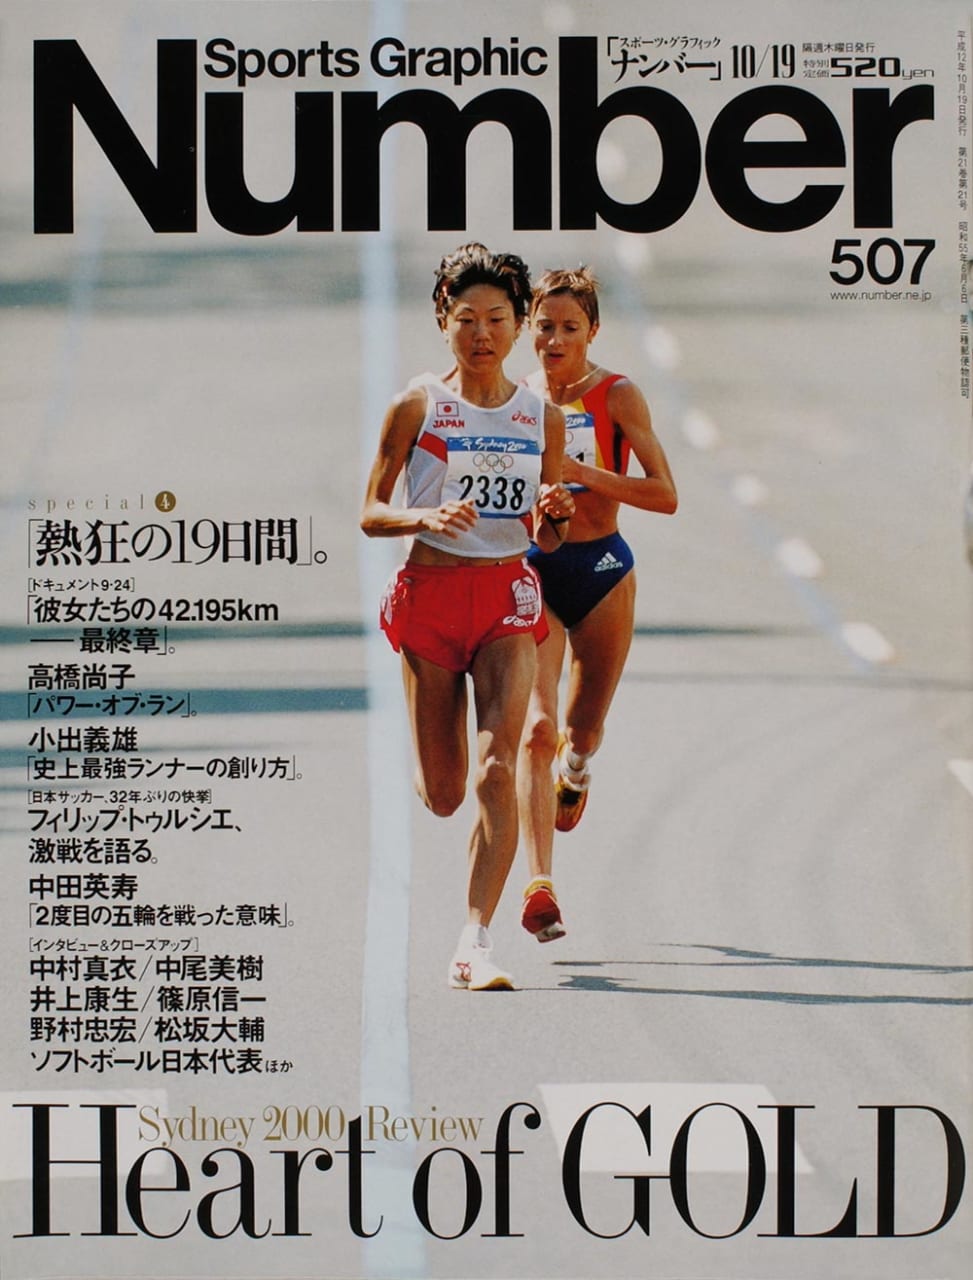 Sports Graphic Number 507号
2000年10月5日発売
表紙撮影：佐貫直哉